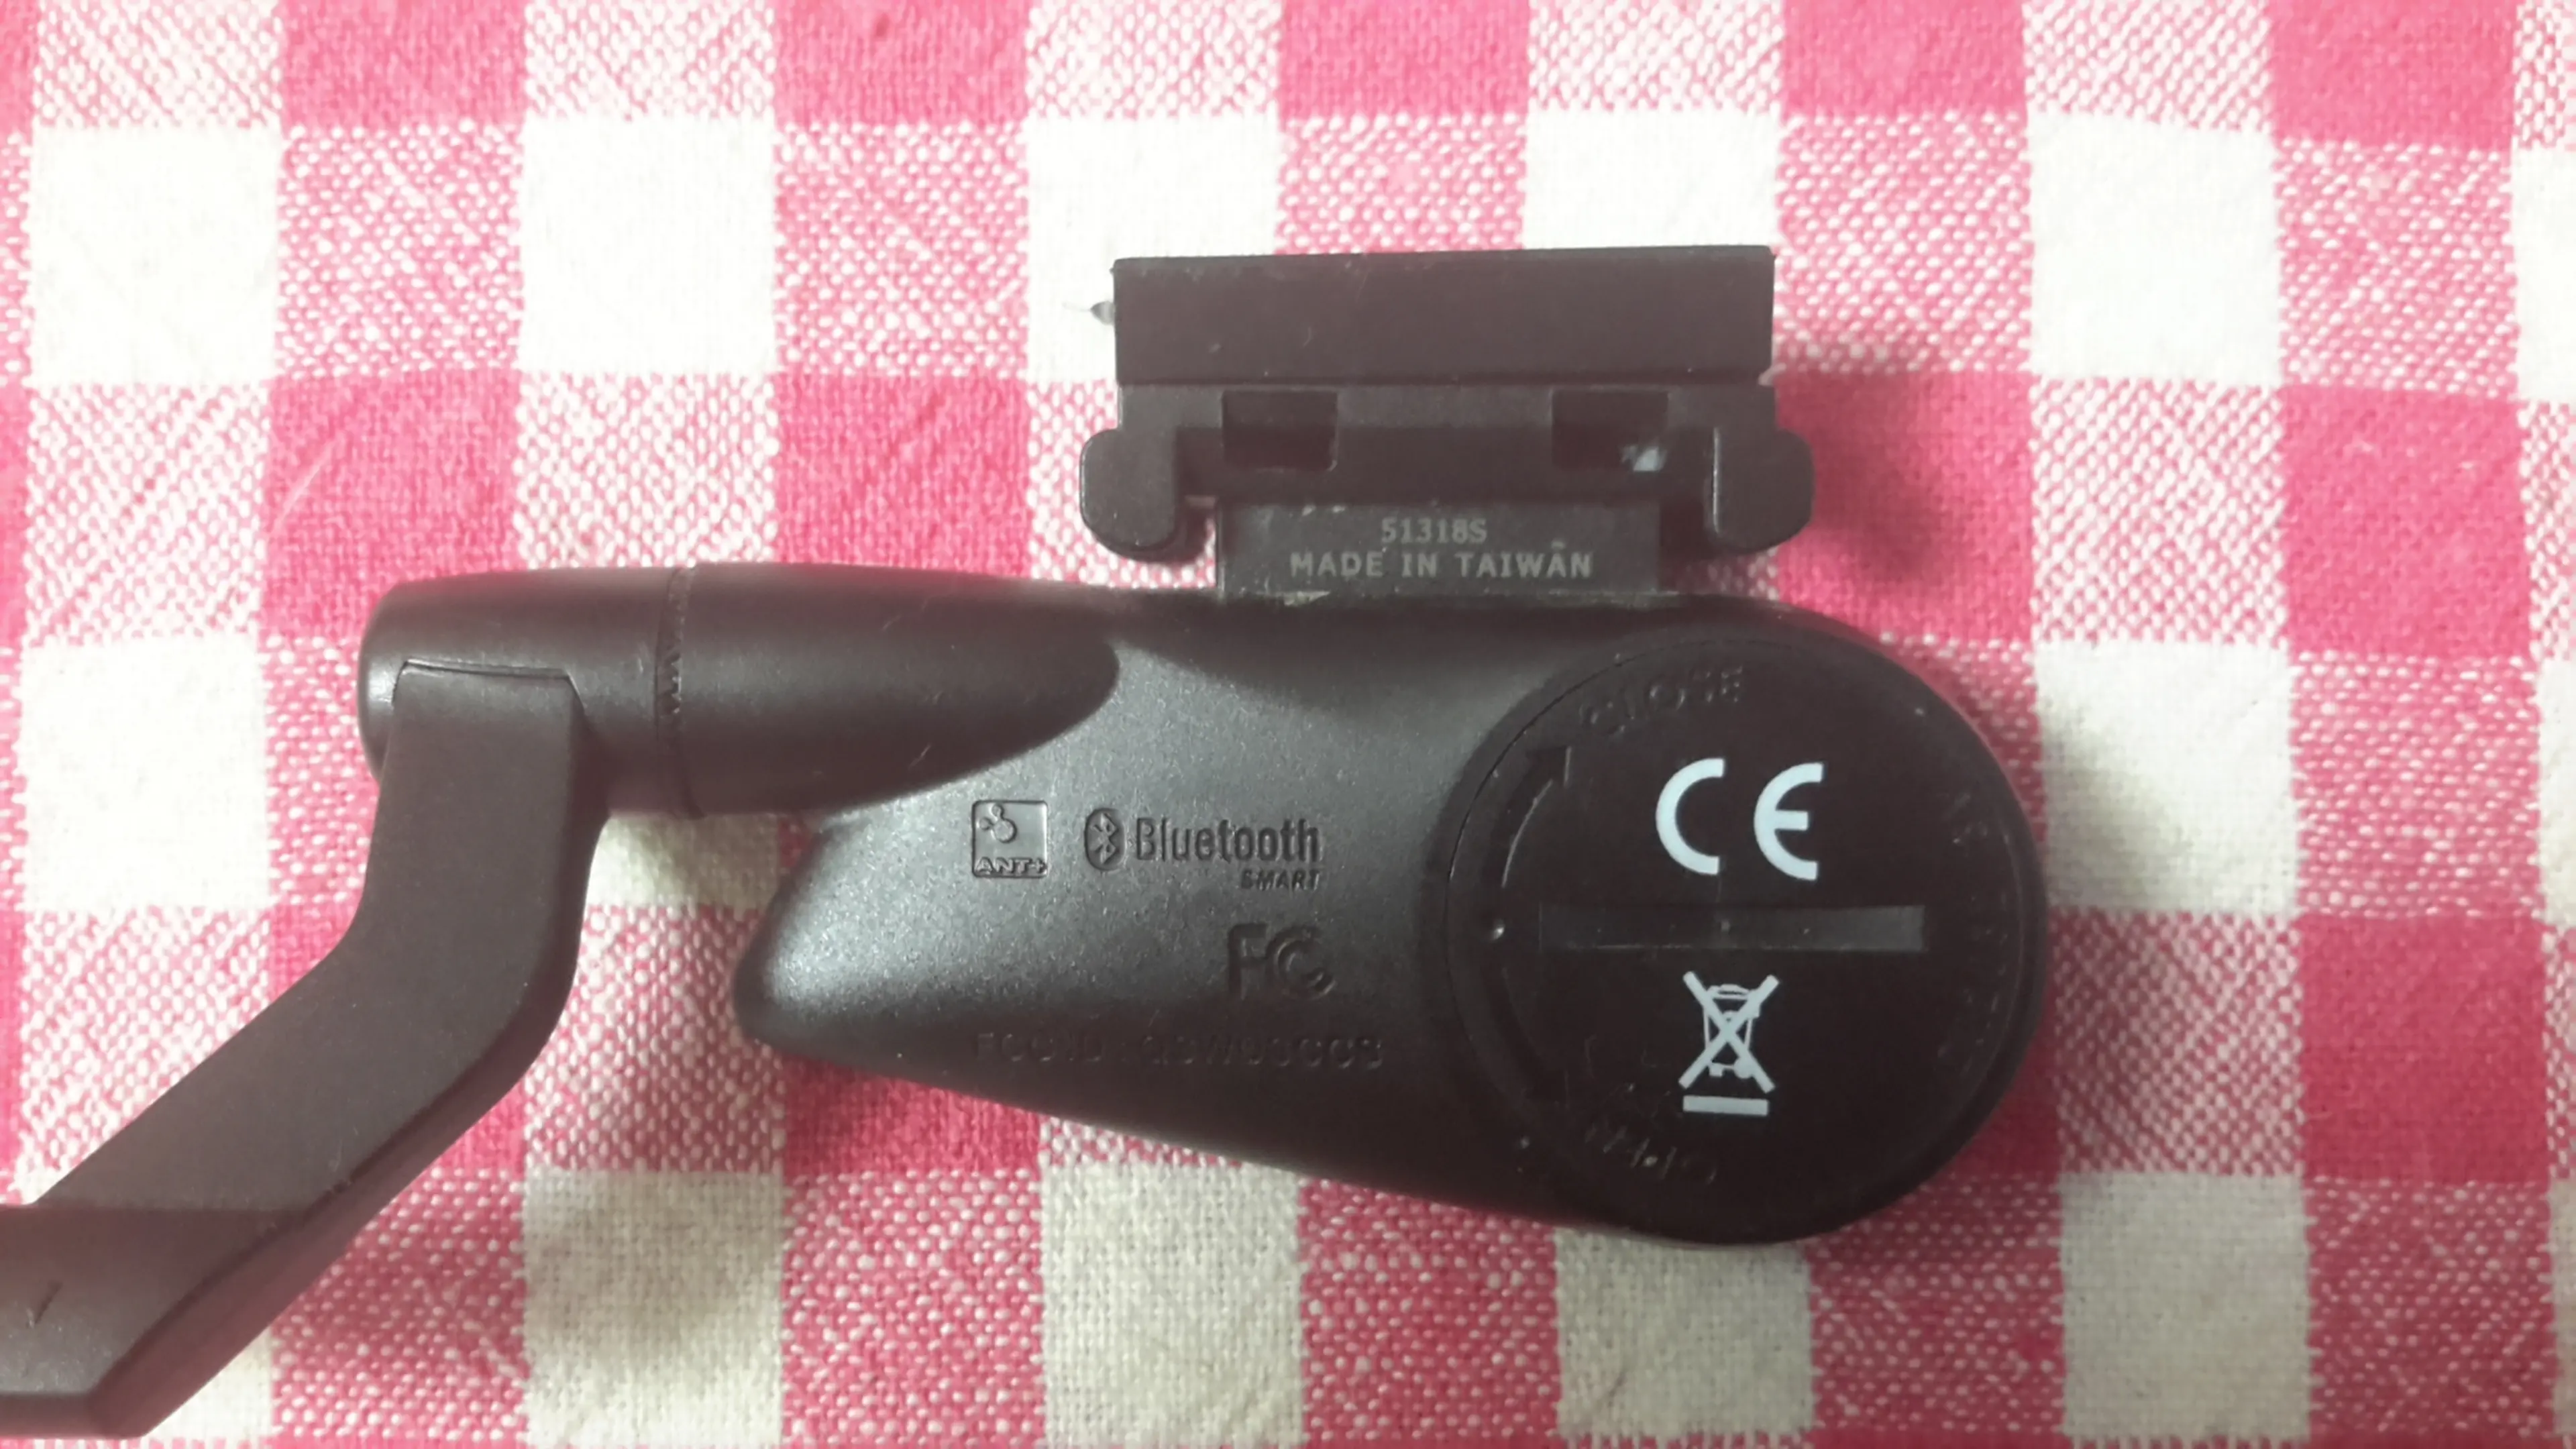 2. Sigma R2 Duo - Senzor Combo Viteza/Cadenta - ANT+ / Smart Bluetooth